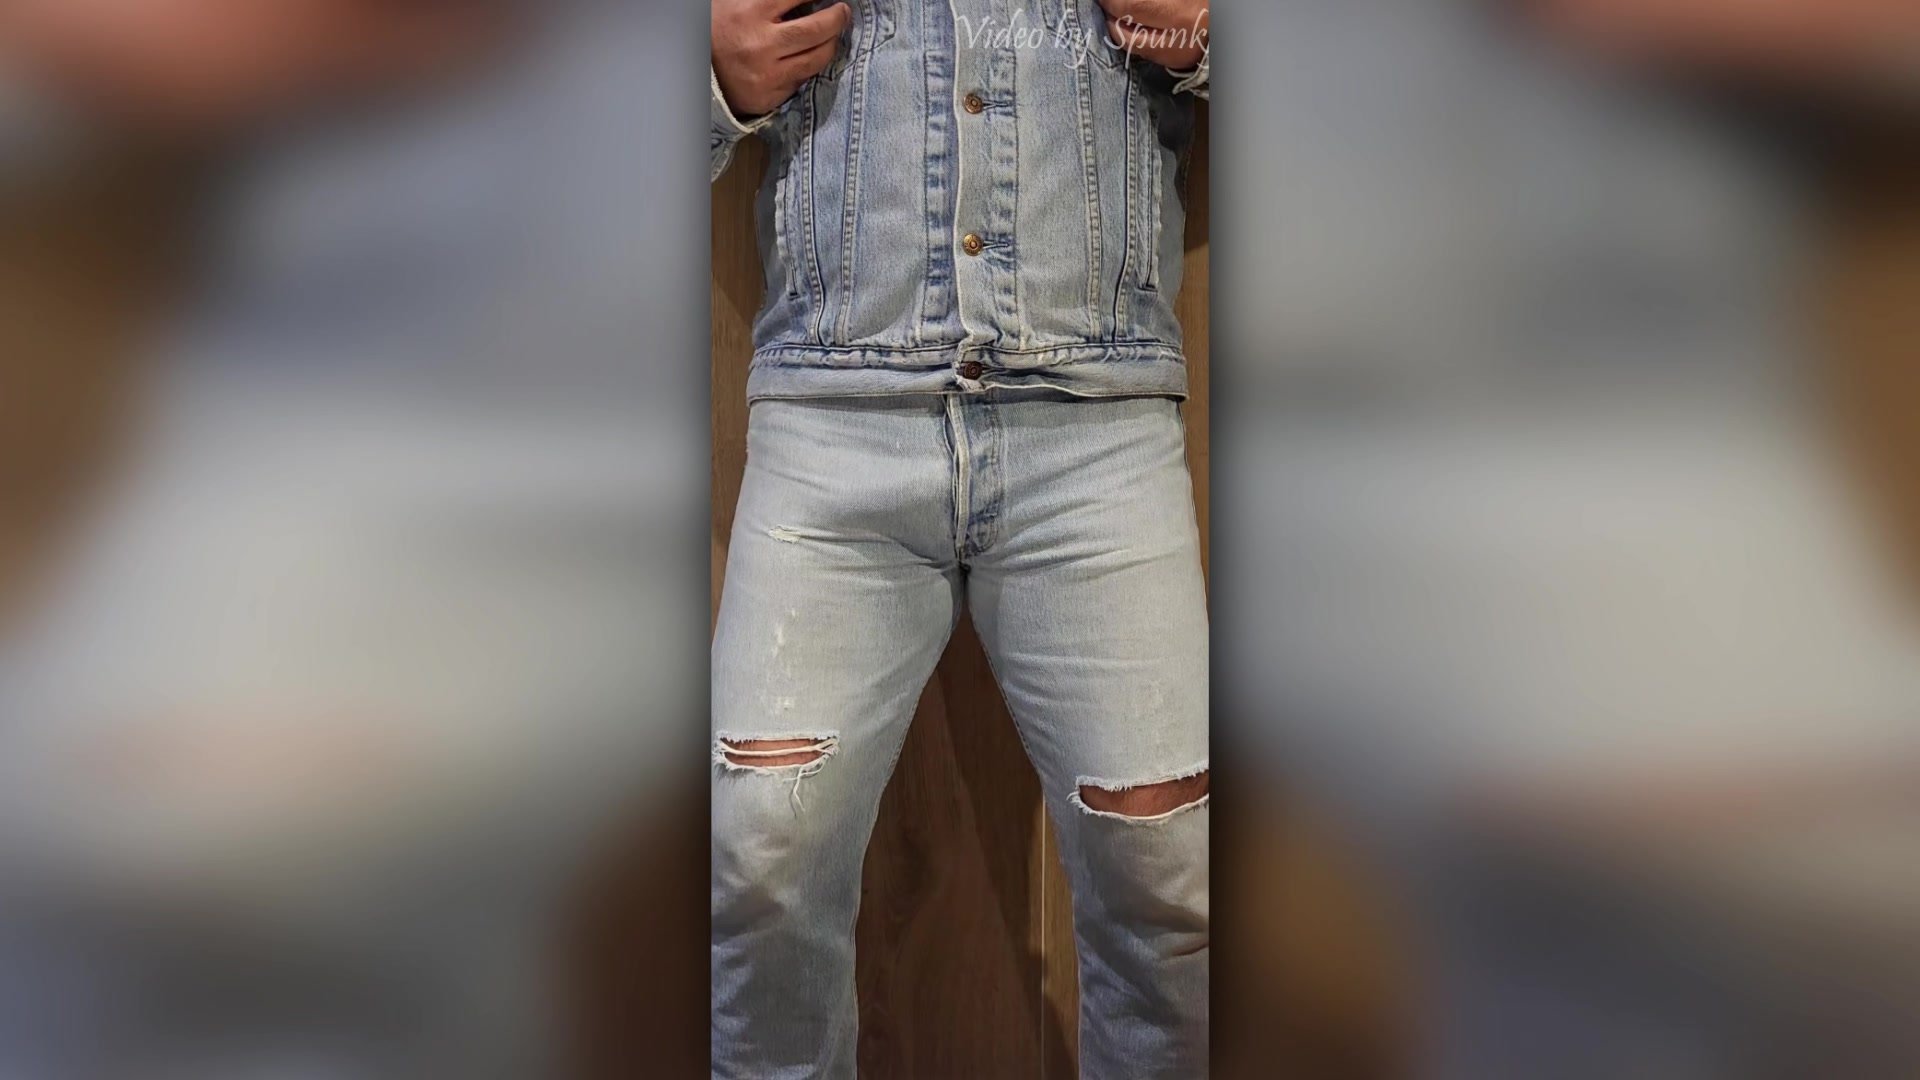 Cumming inside my Levis 501 jeans